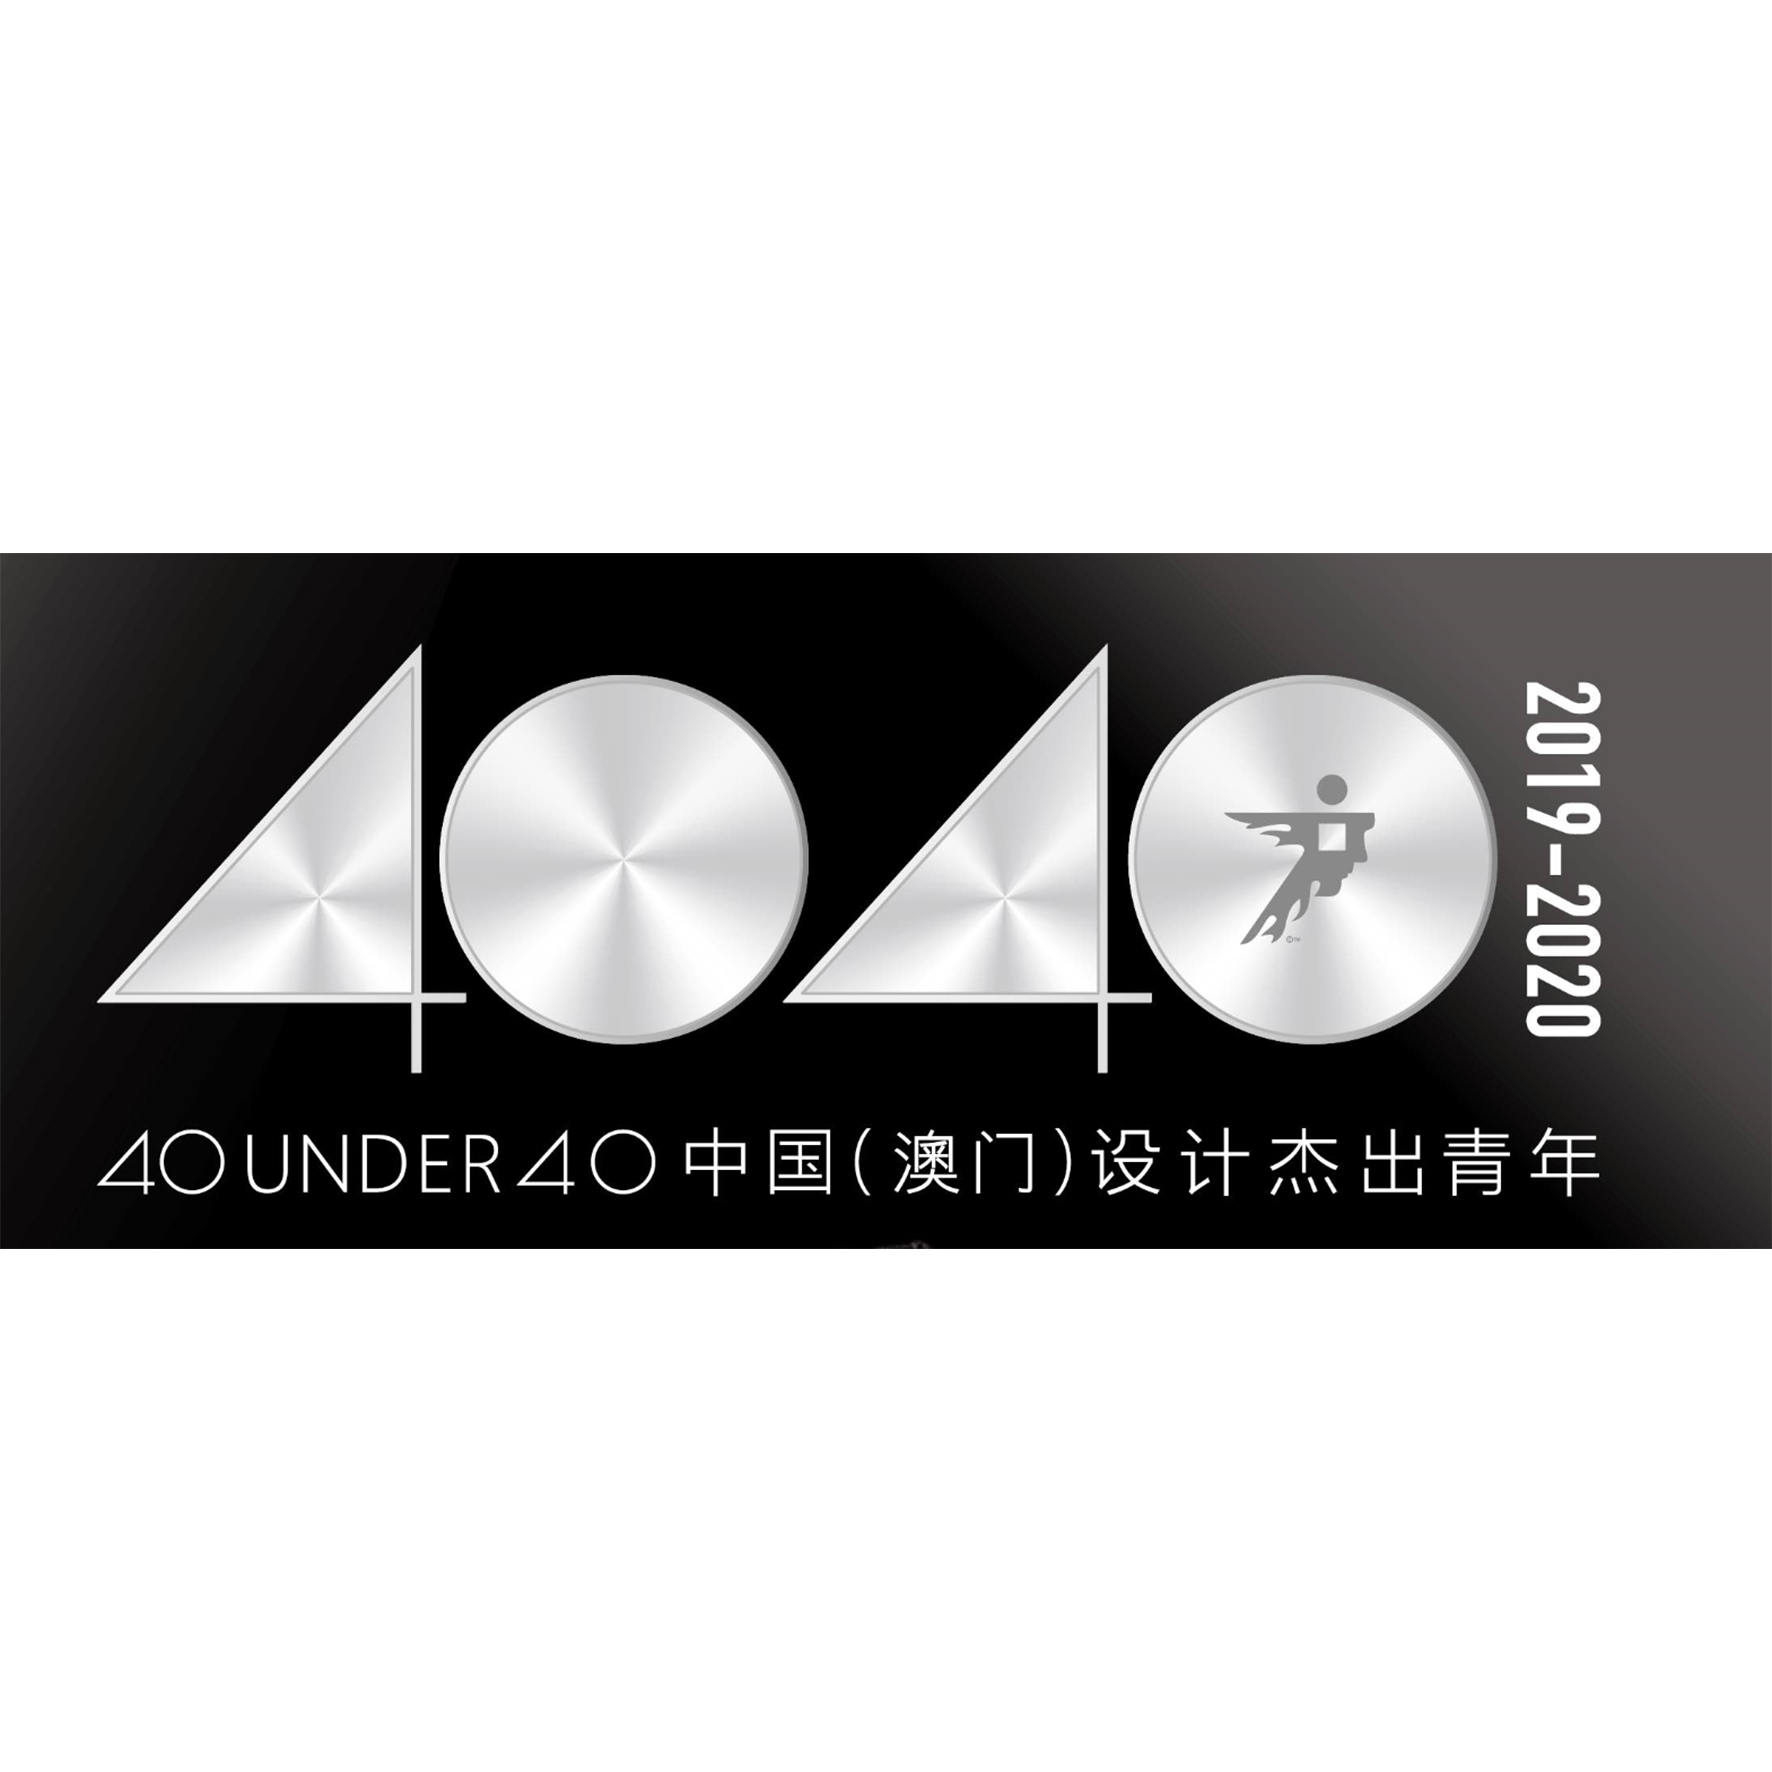 China (Macau) 40 Under 40 Interior Design Award 2019-2020